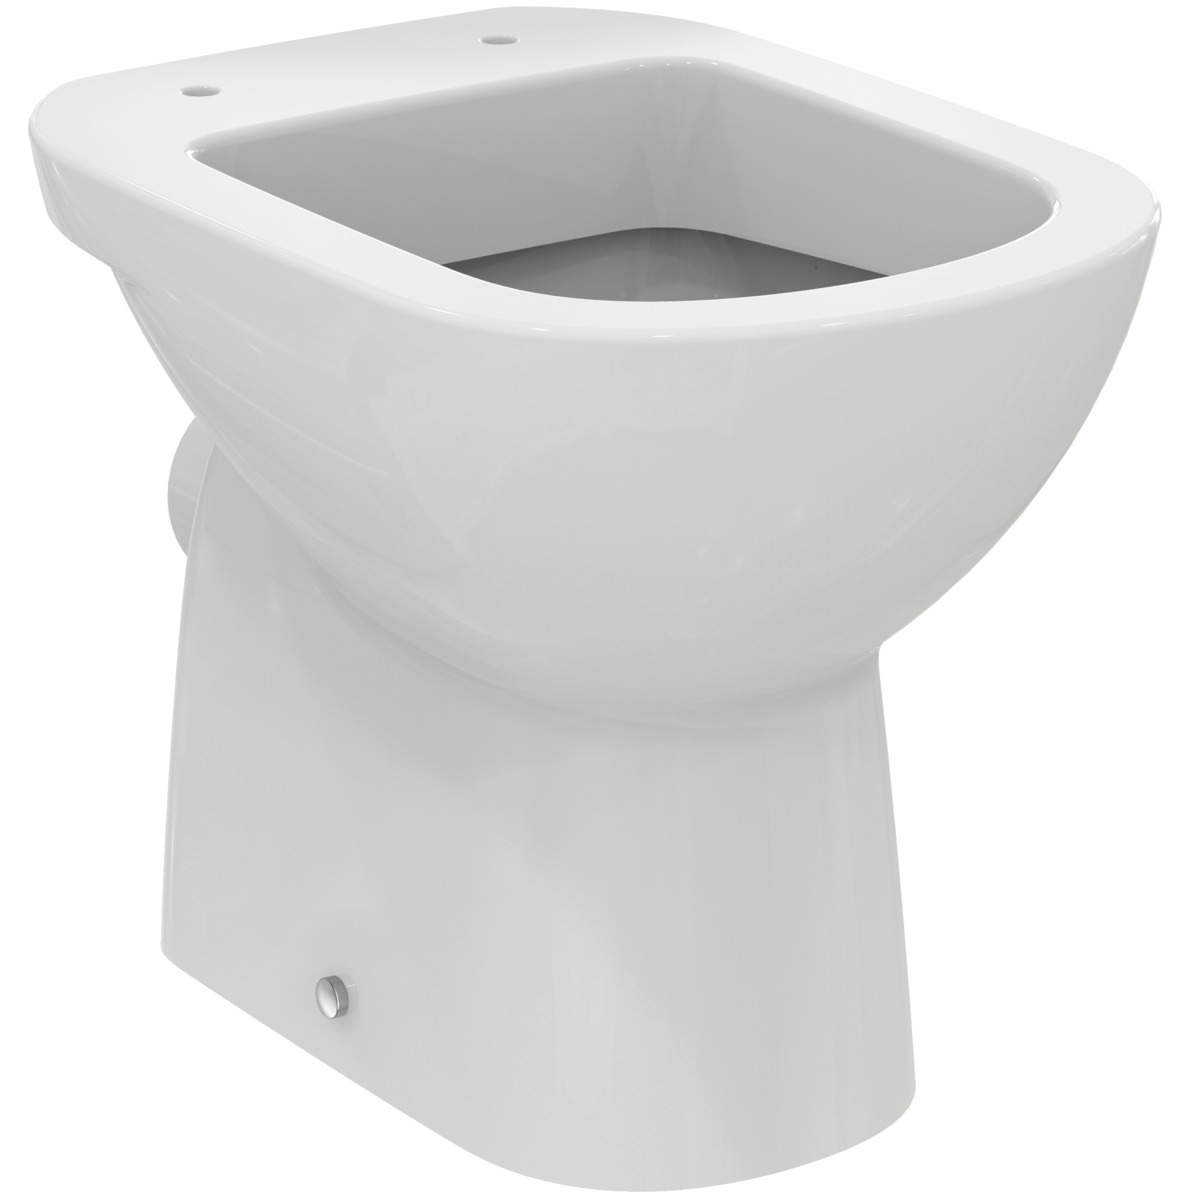 Vas WC Ideal Standard I.life A pentru rezervor ingropat baie imagine bricosteel.ro